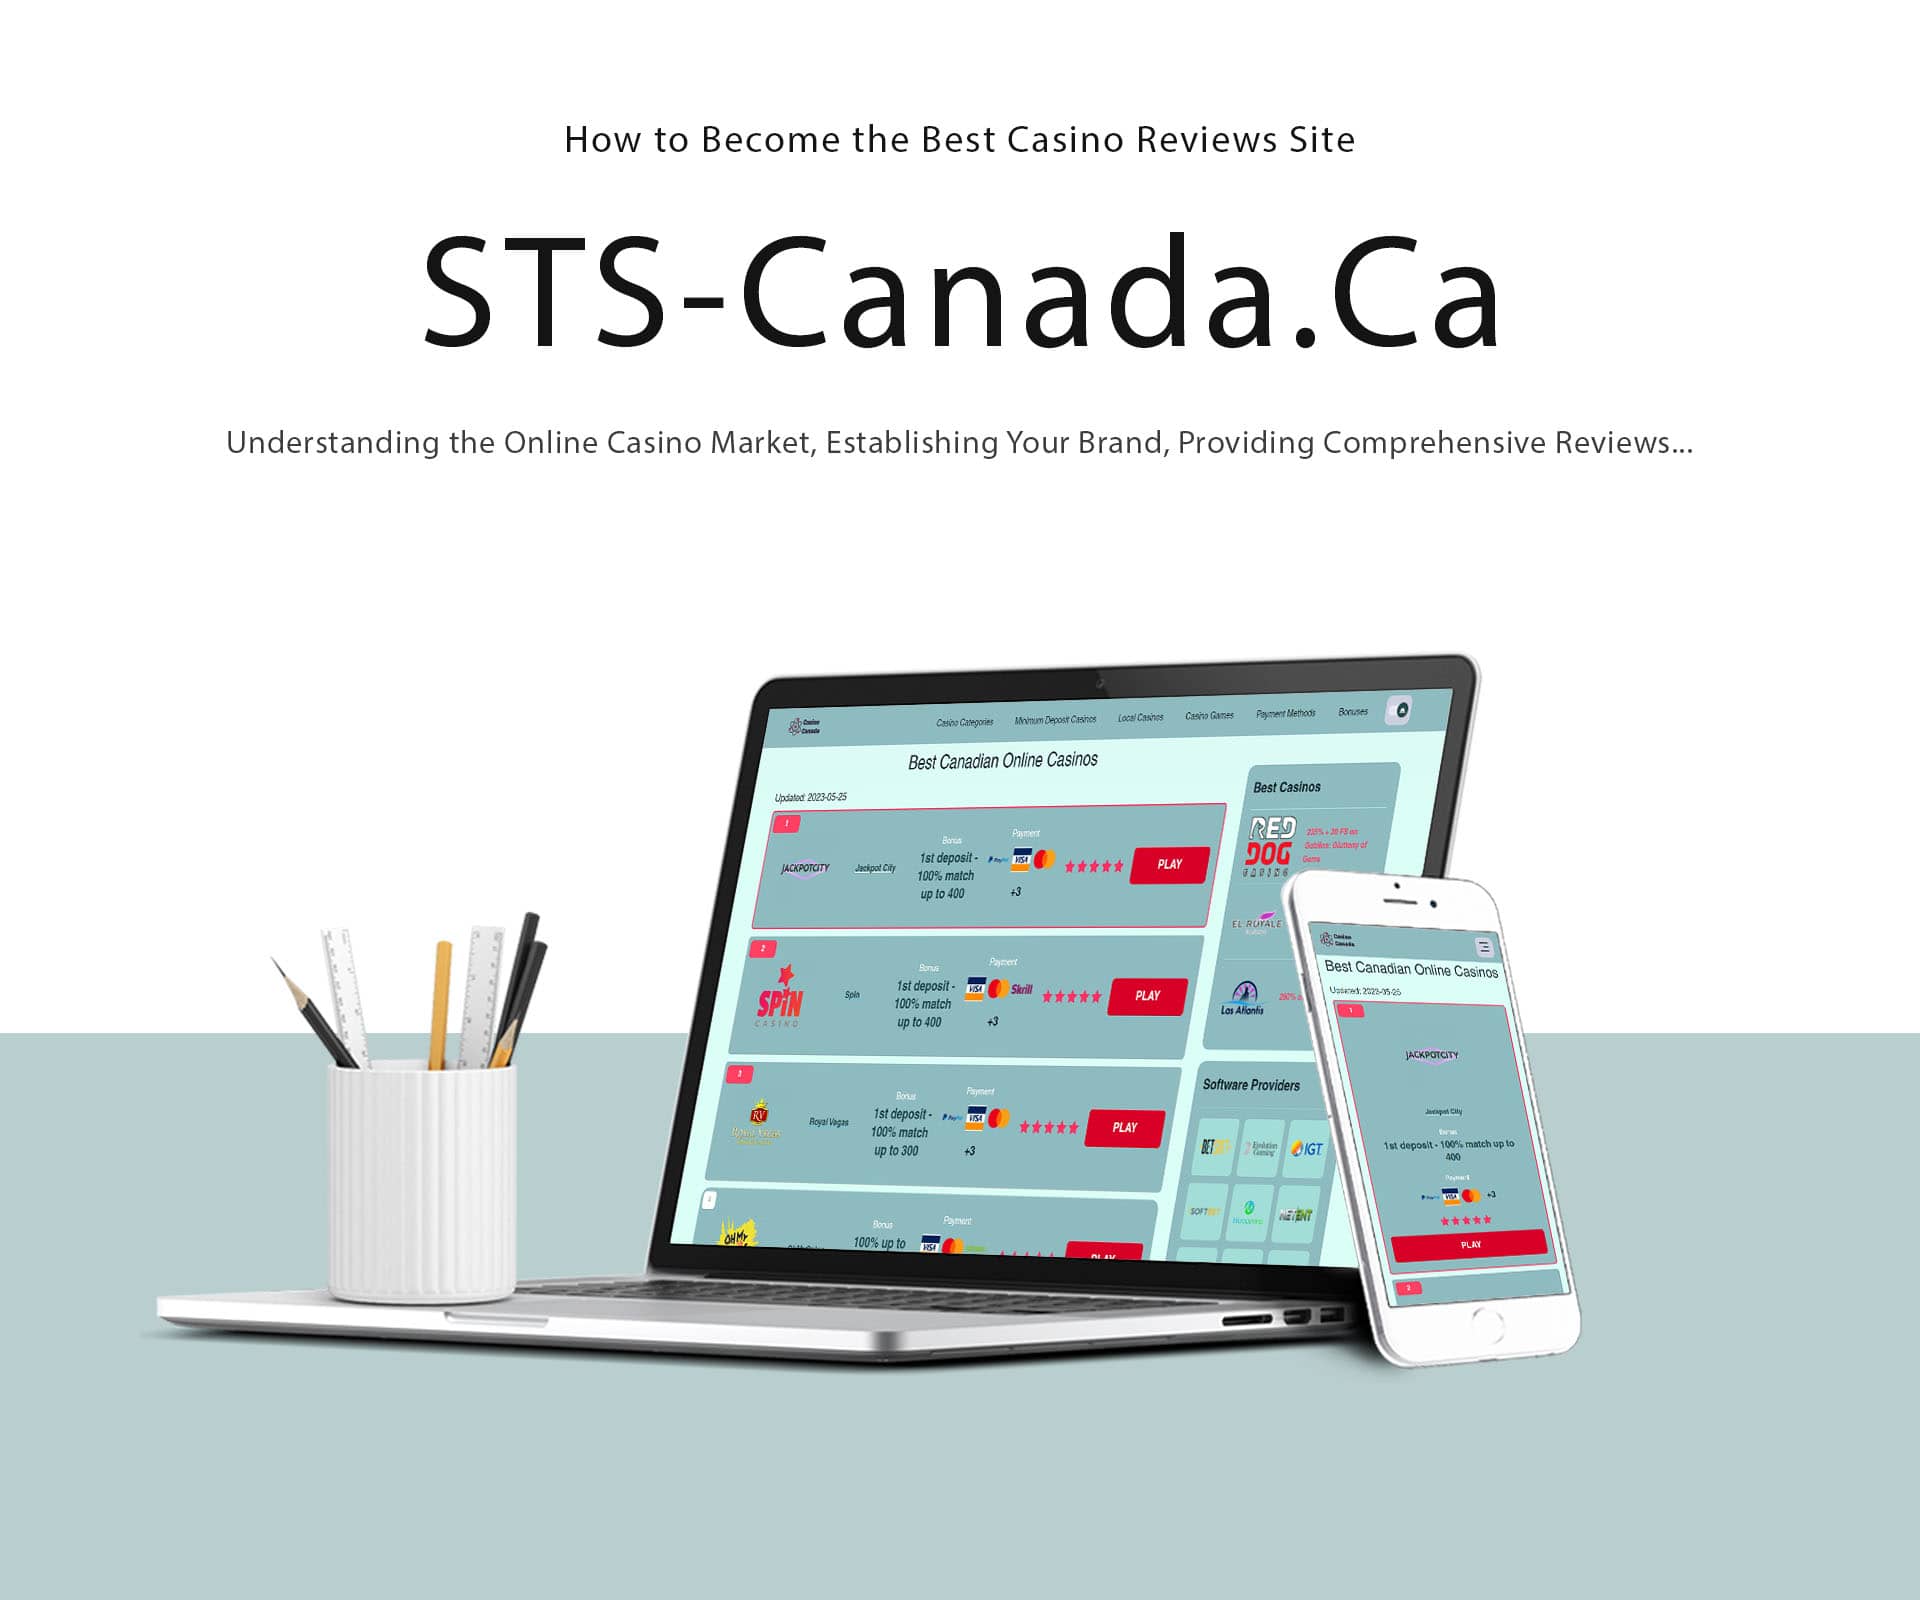 Best Casino Reviews Site: Sts-Canada.Ca